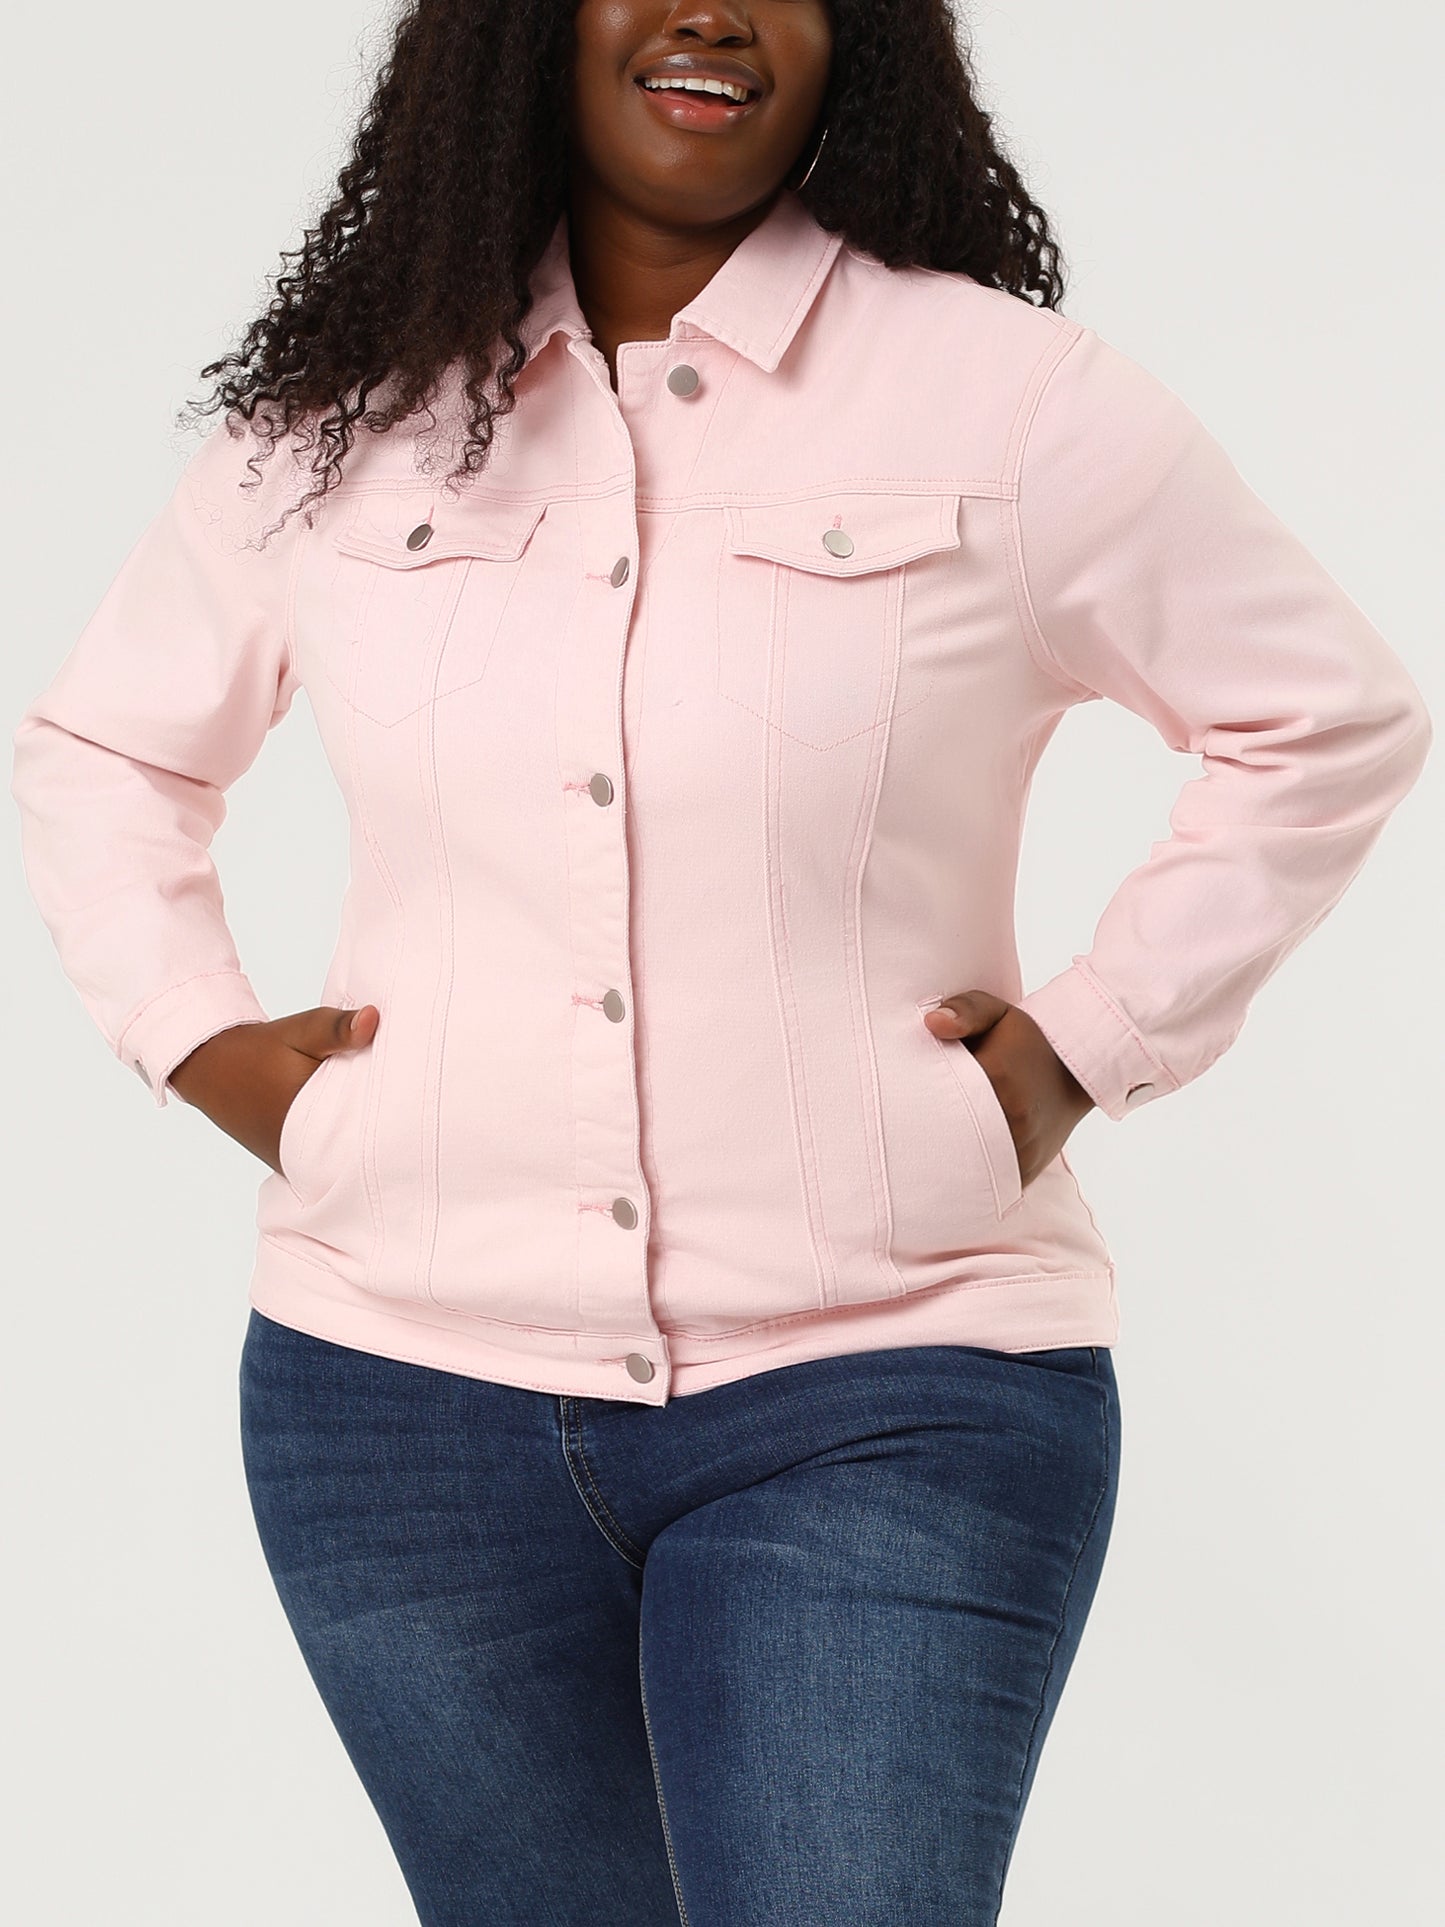 Agnes Orinda Plus Size Stitching Button Front Washed Denim Jacket Pink